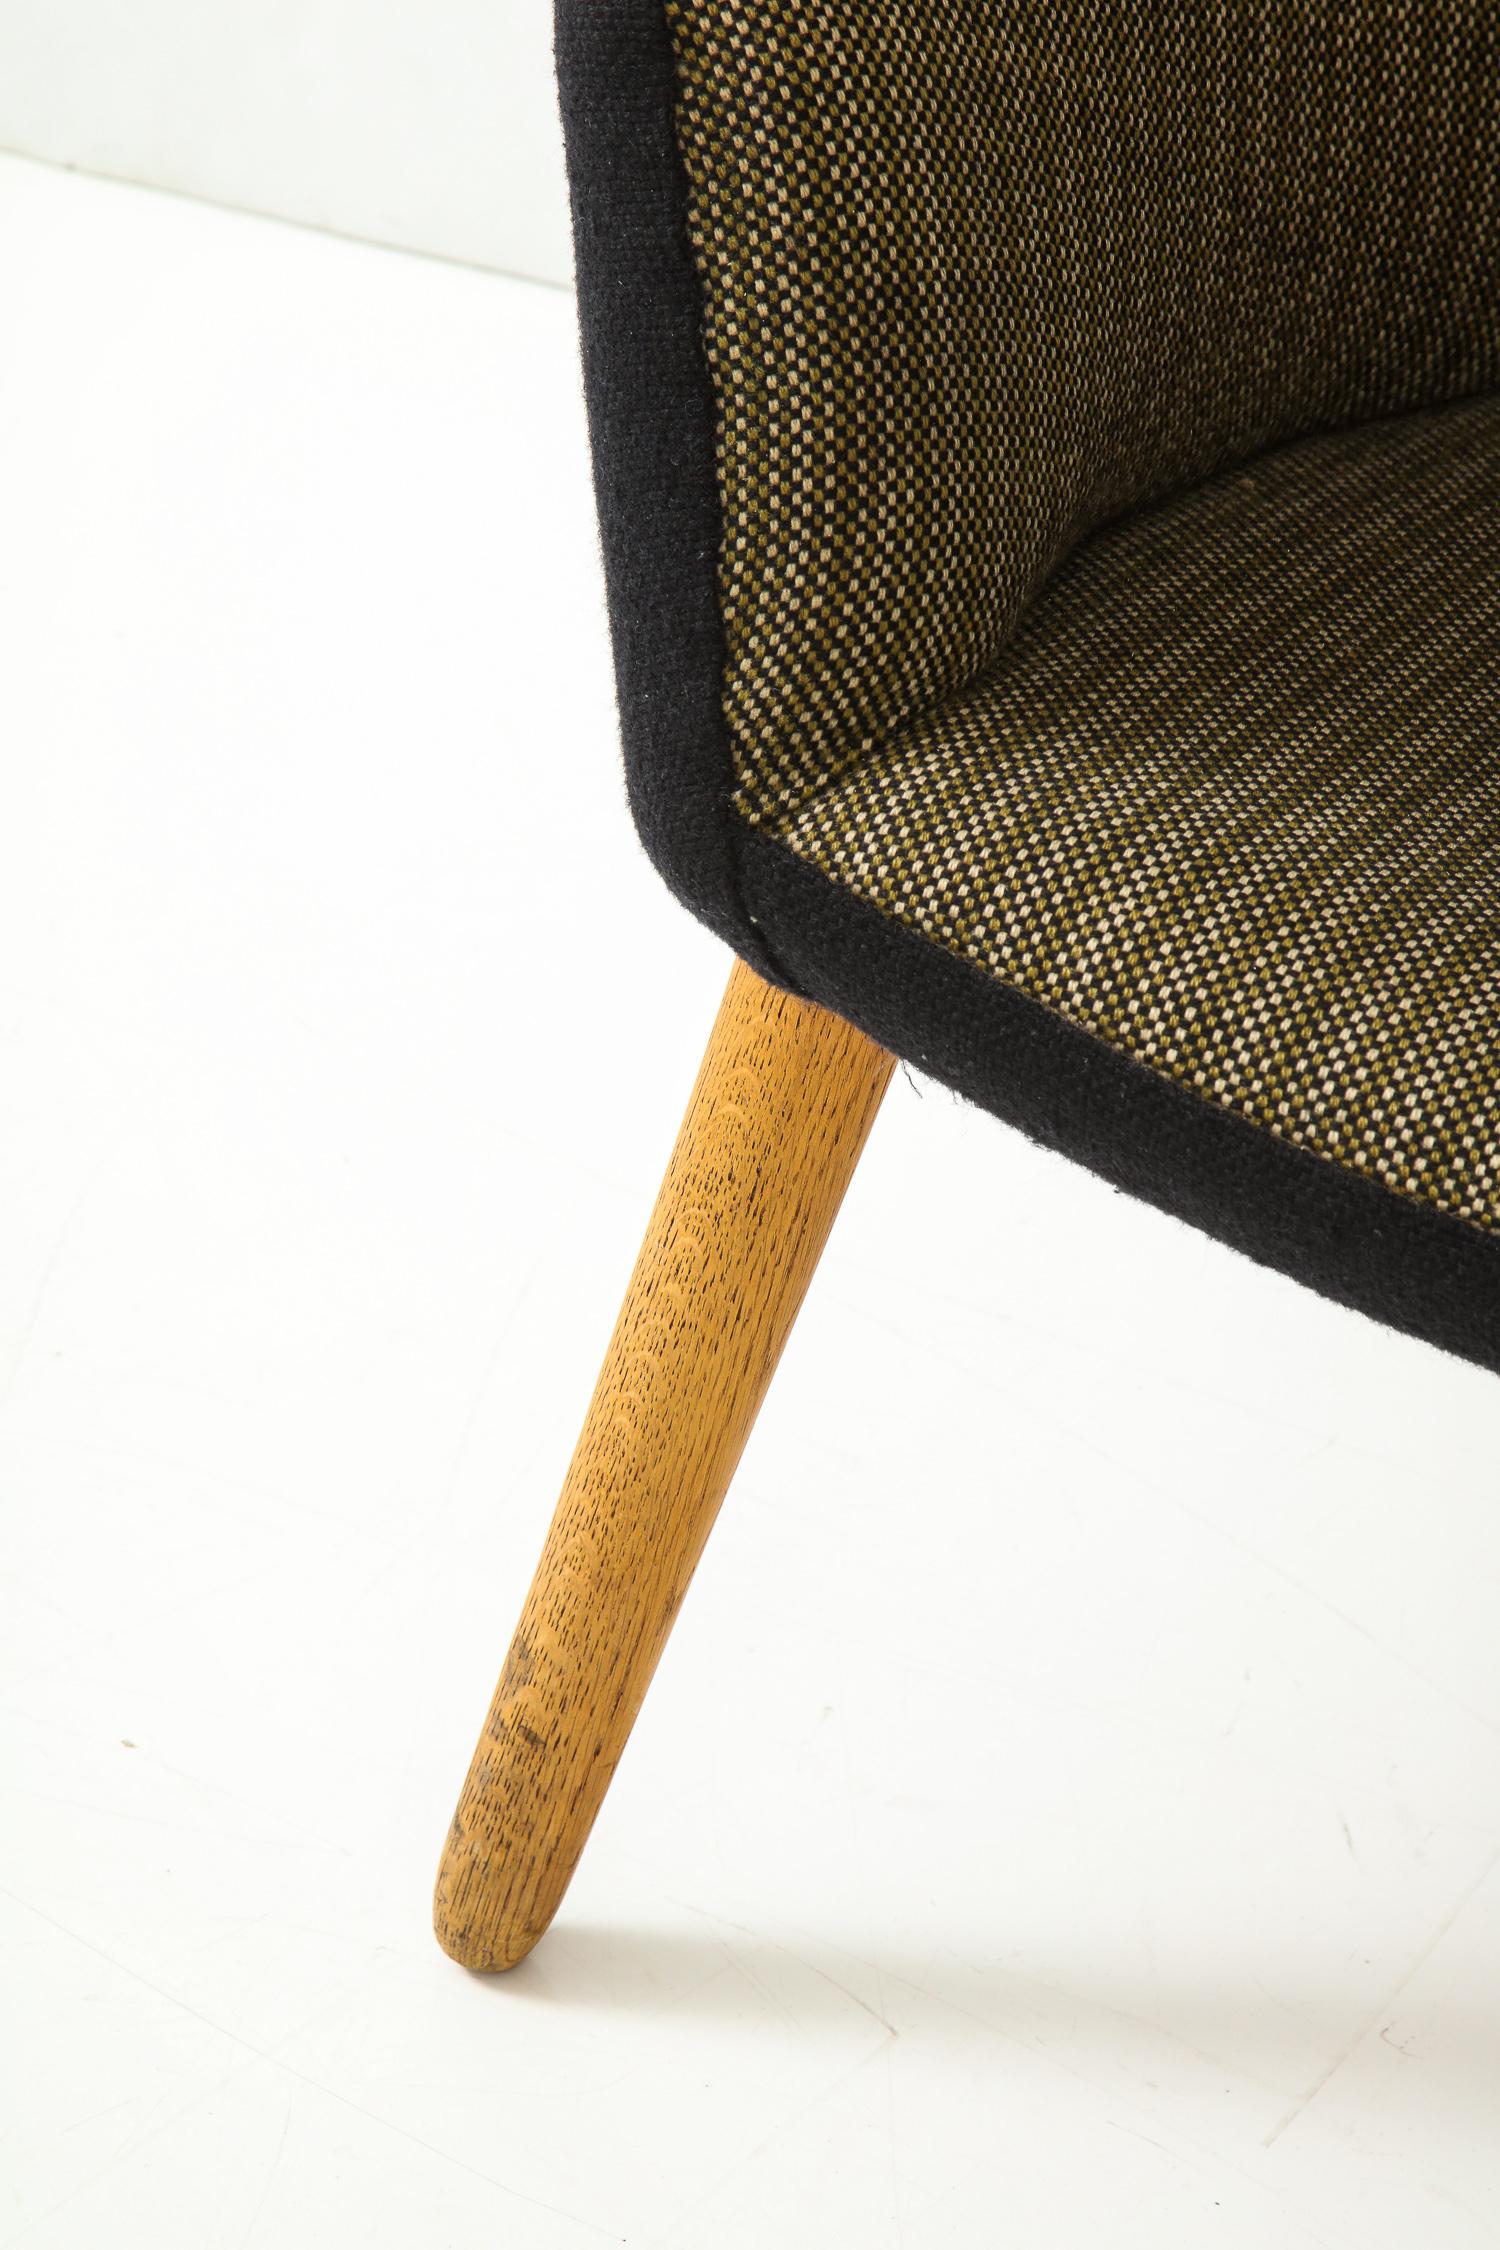 Mid-20th Century Nanna Ditzel AP-26 Lounge Chair for A.P. Stolen